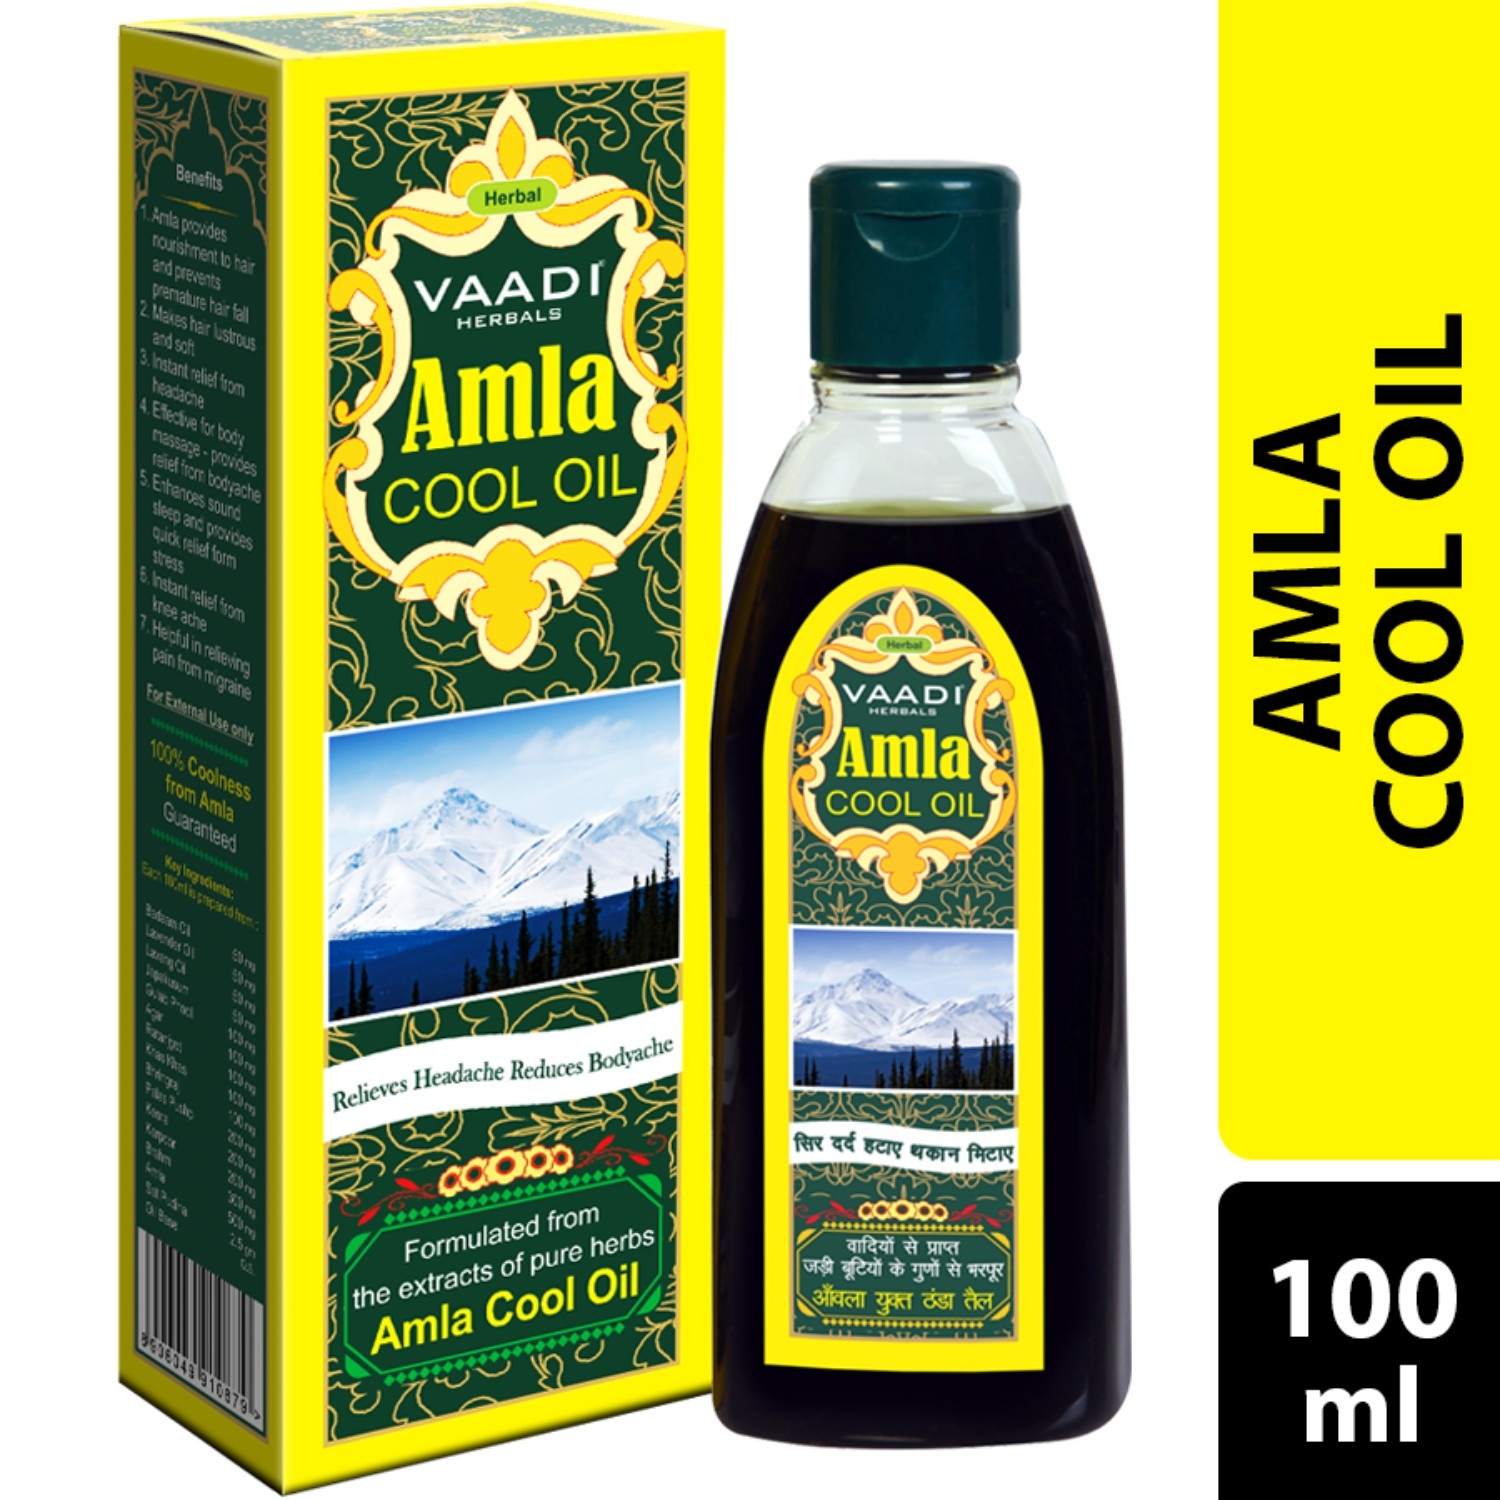 Vaadi Herbals Amla Cool Oil (100ml)